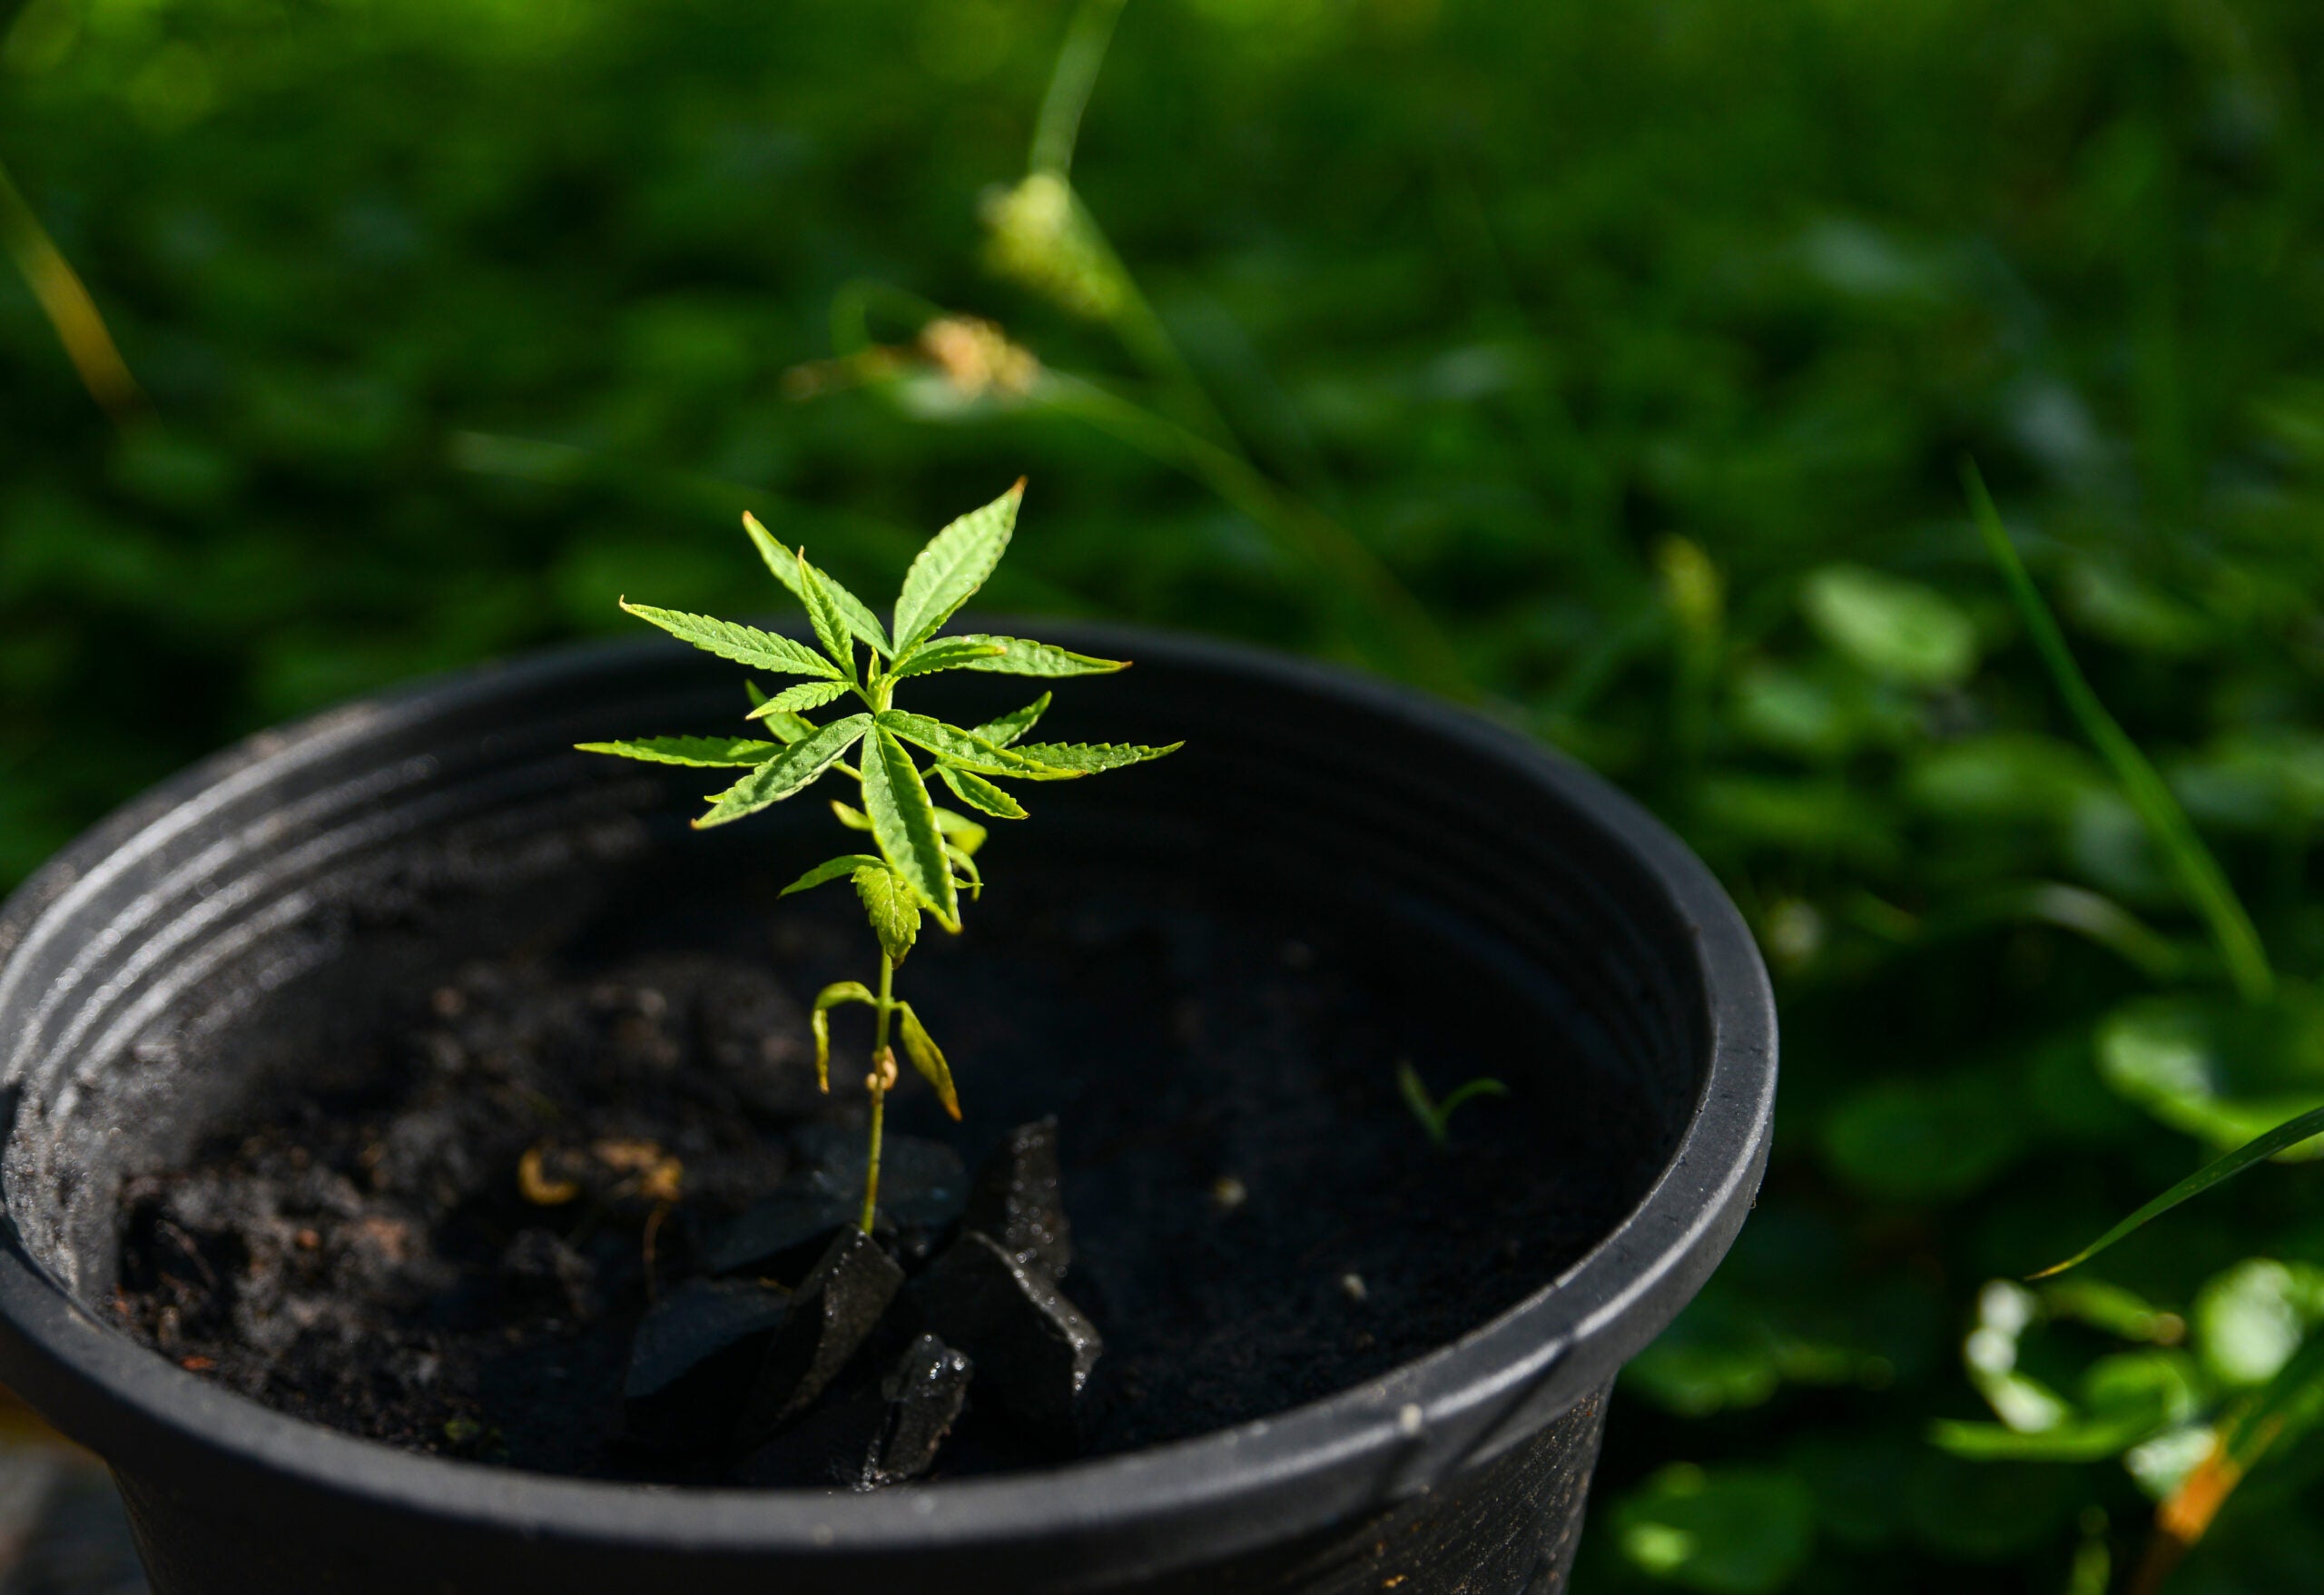 Pennsylvania Senators Put Bipartisan Support Behind New Bill To Allow Medical Marijuana Patients To Grow Cannabis At Home